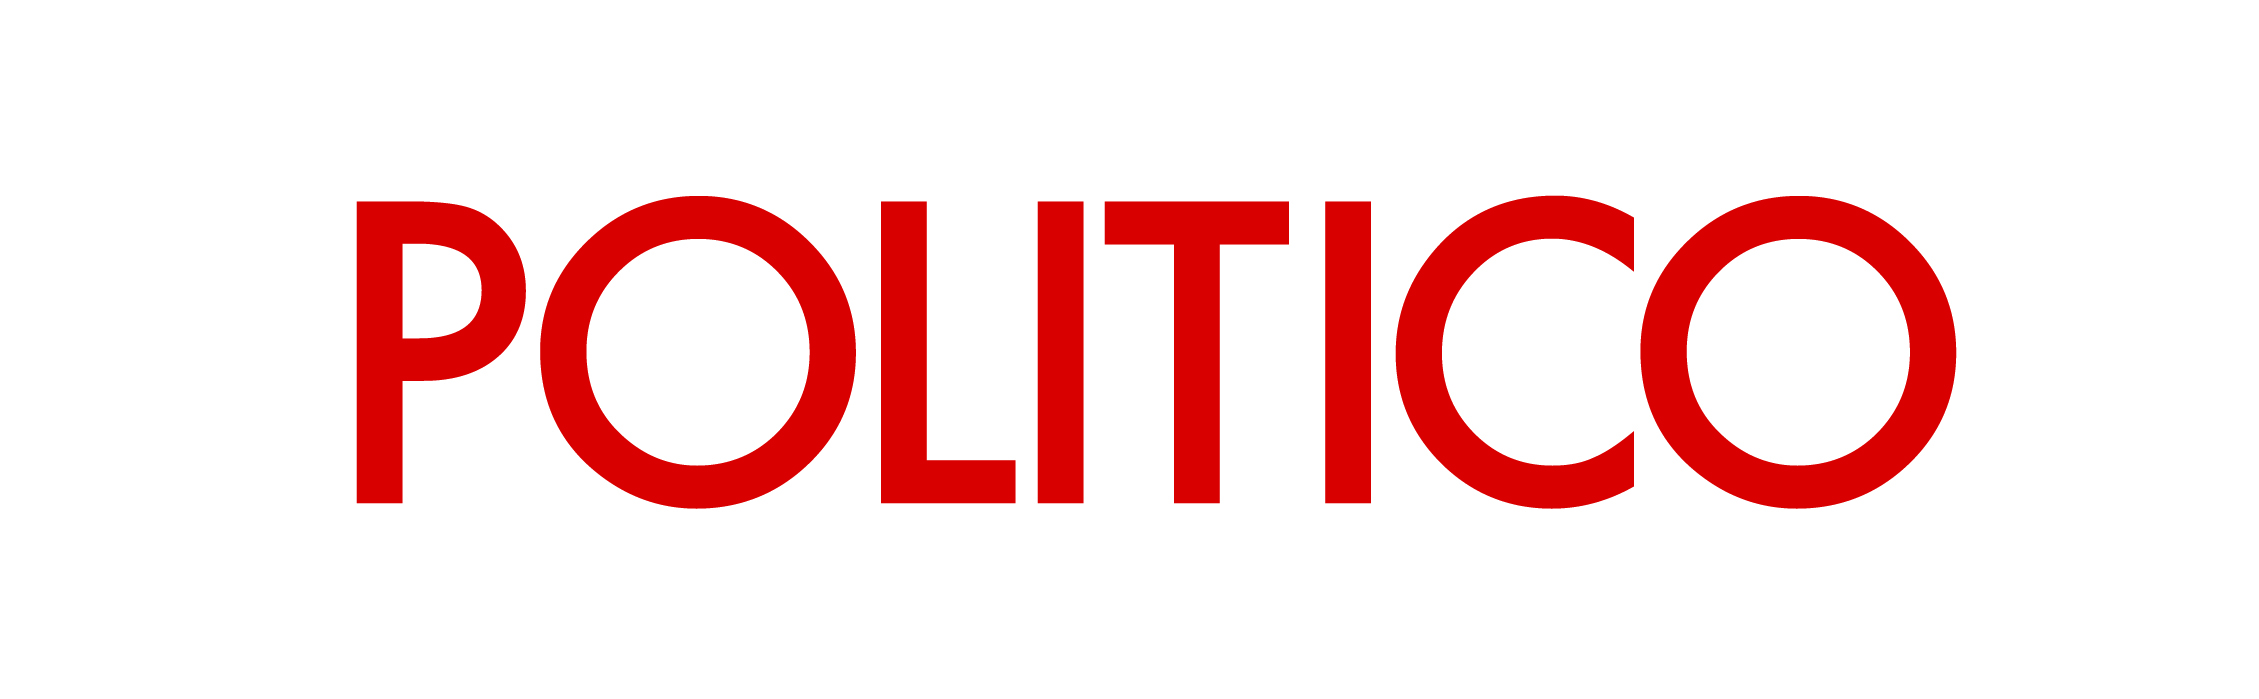 Politico-Logo.jpg